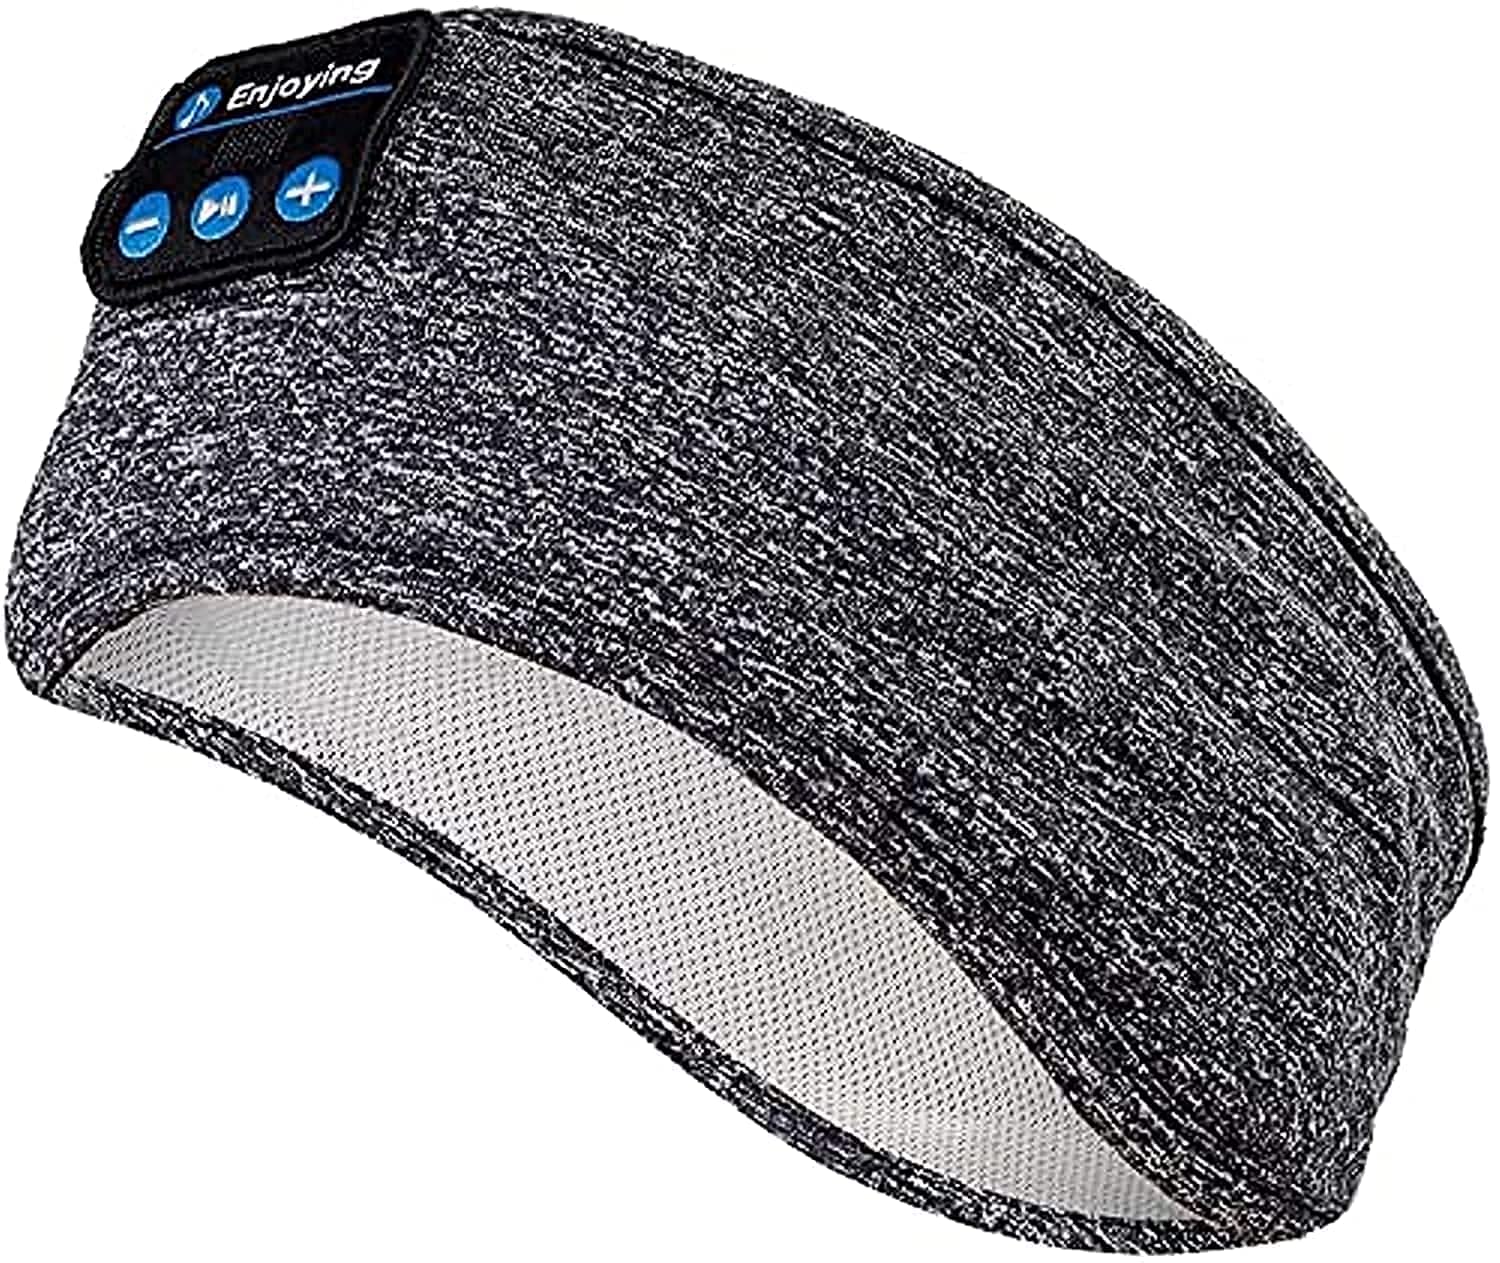 Perytong Wireless Bluetooth 5.0 Sleep Headphones $10 at Amazon